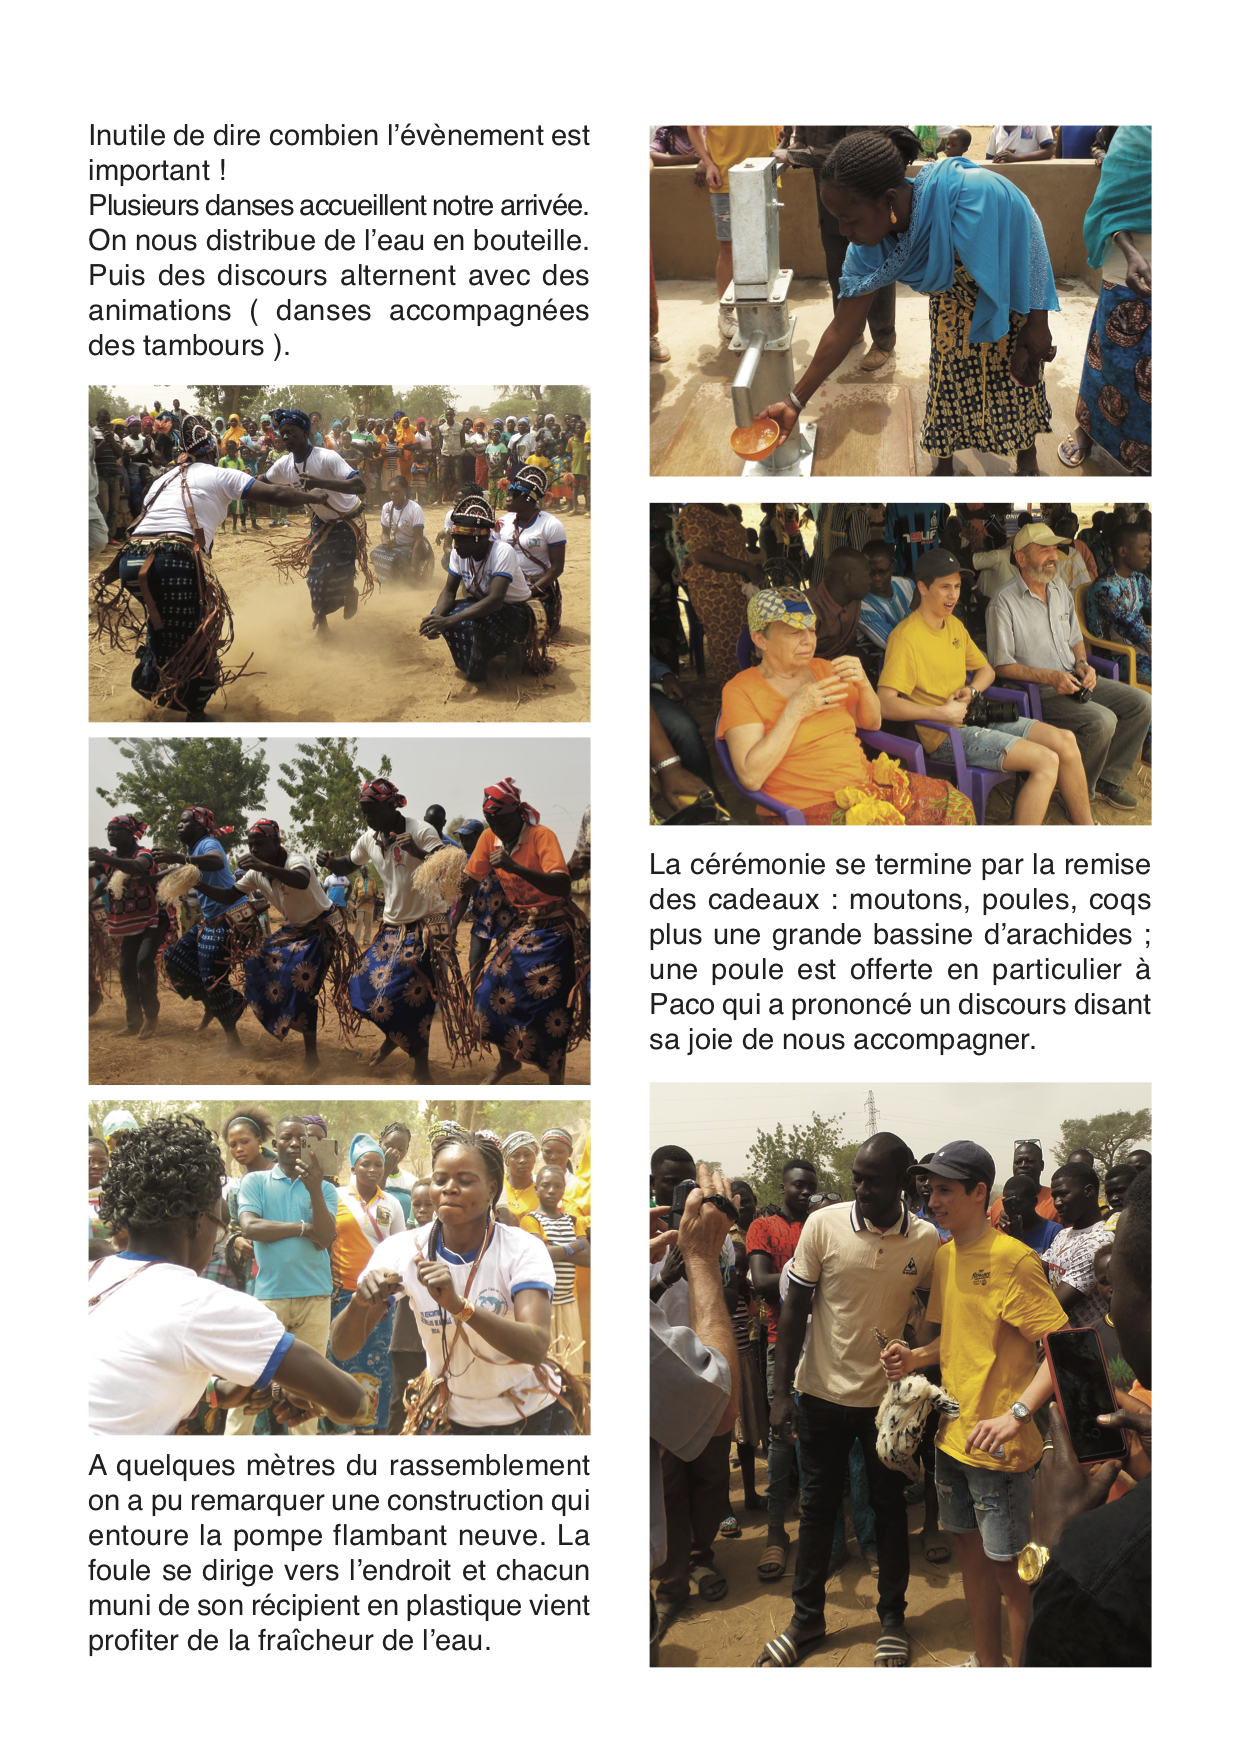 Journal de voyage au Burkina Faso - Mardi 1er au jeudi 3 mars 2022 - page 5